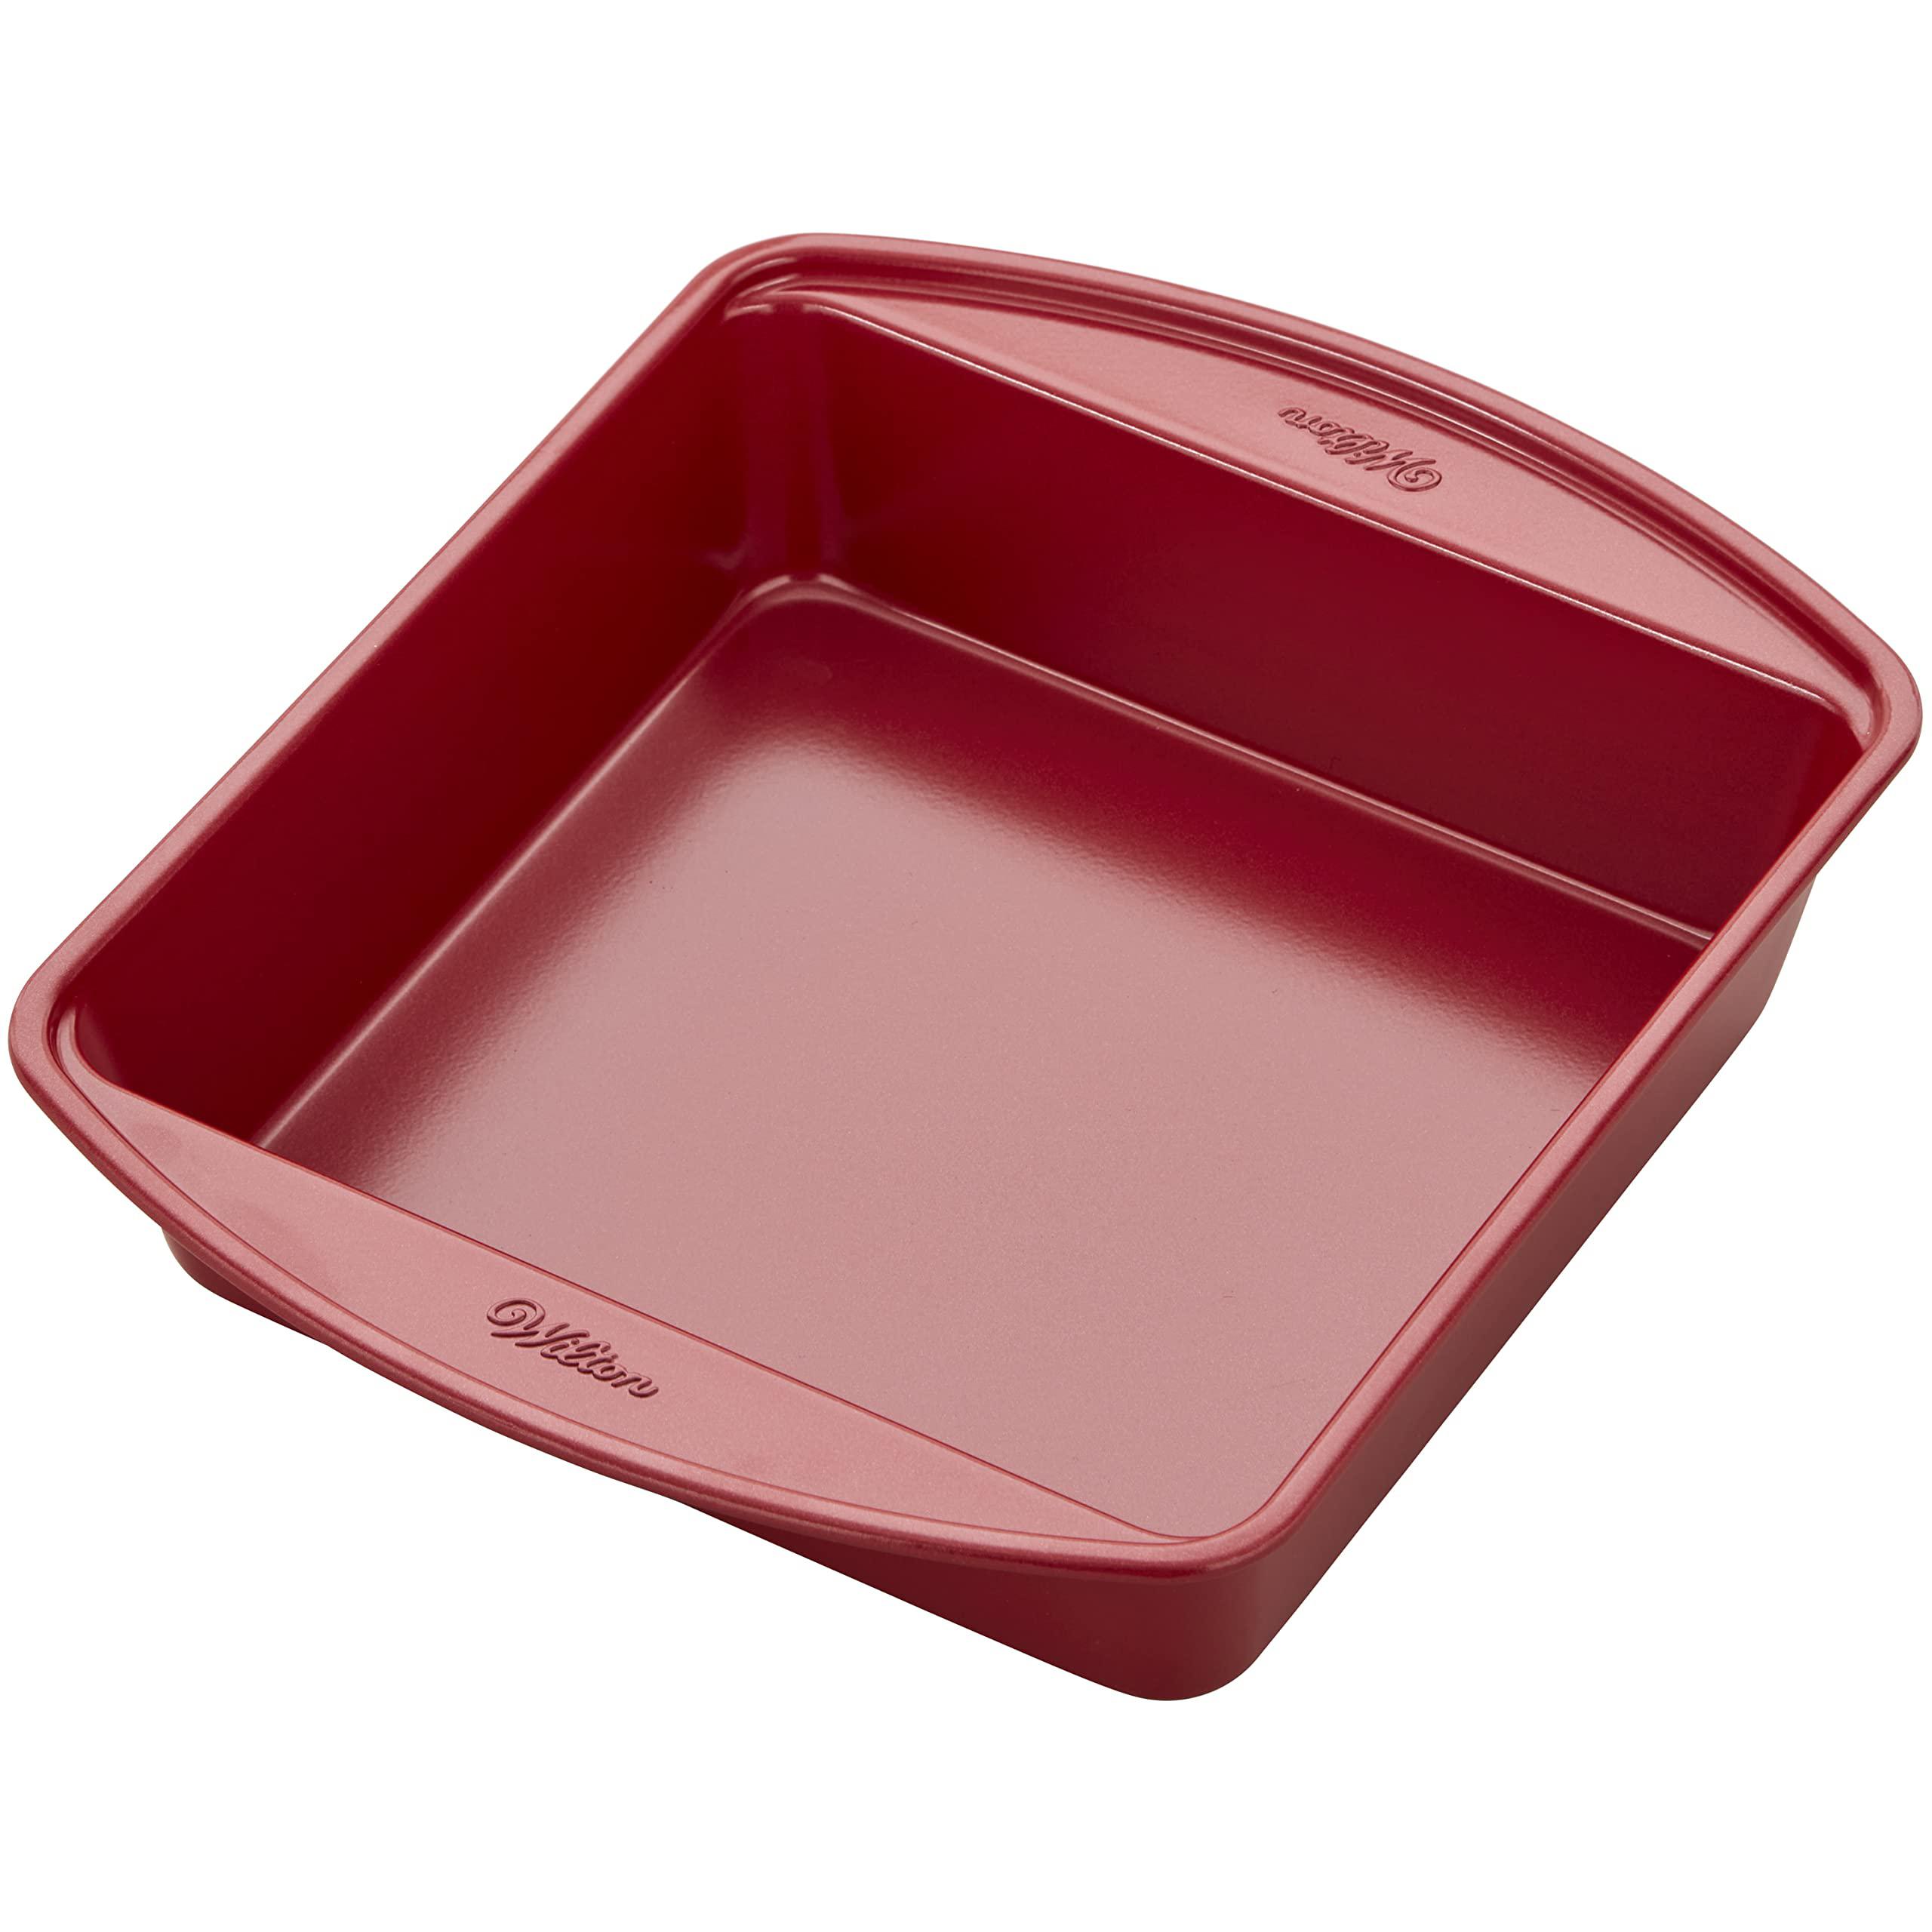 wilton non-stick christmas red square cake pan, 8 x 8-inch